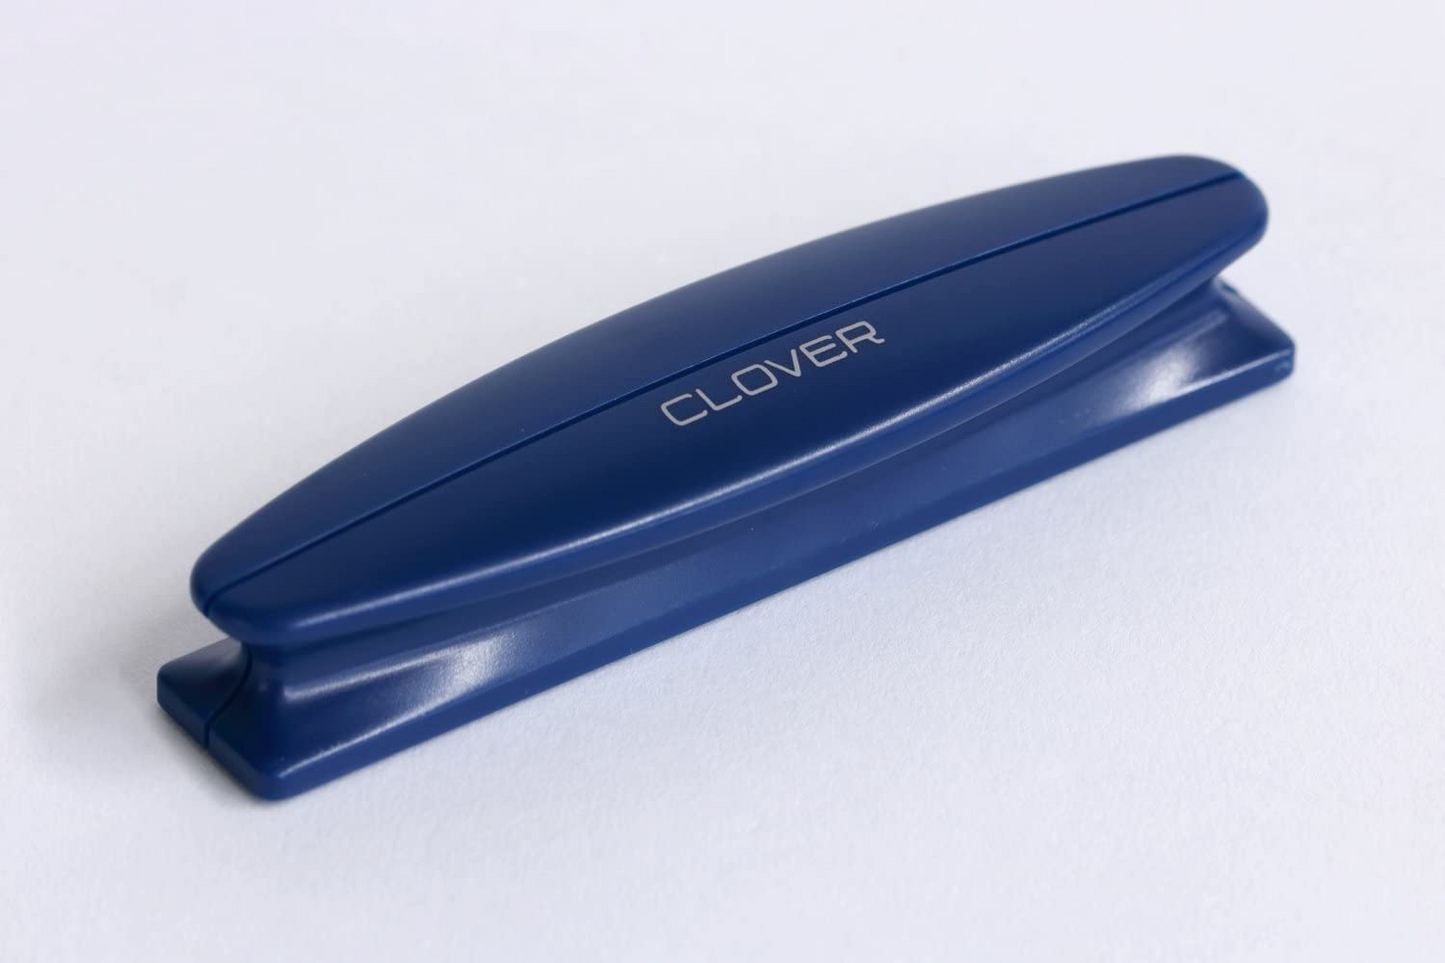 Clover ruler handle 間尺用手柄